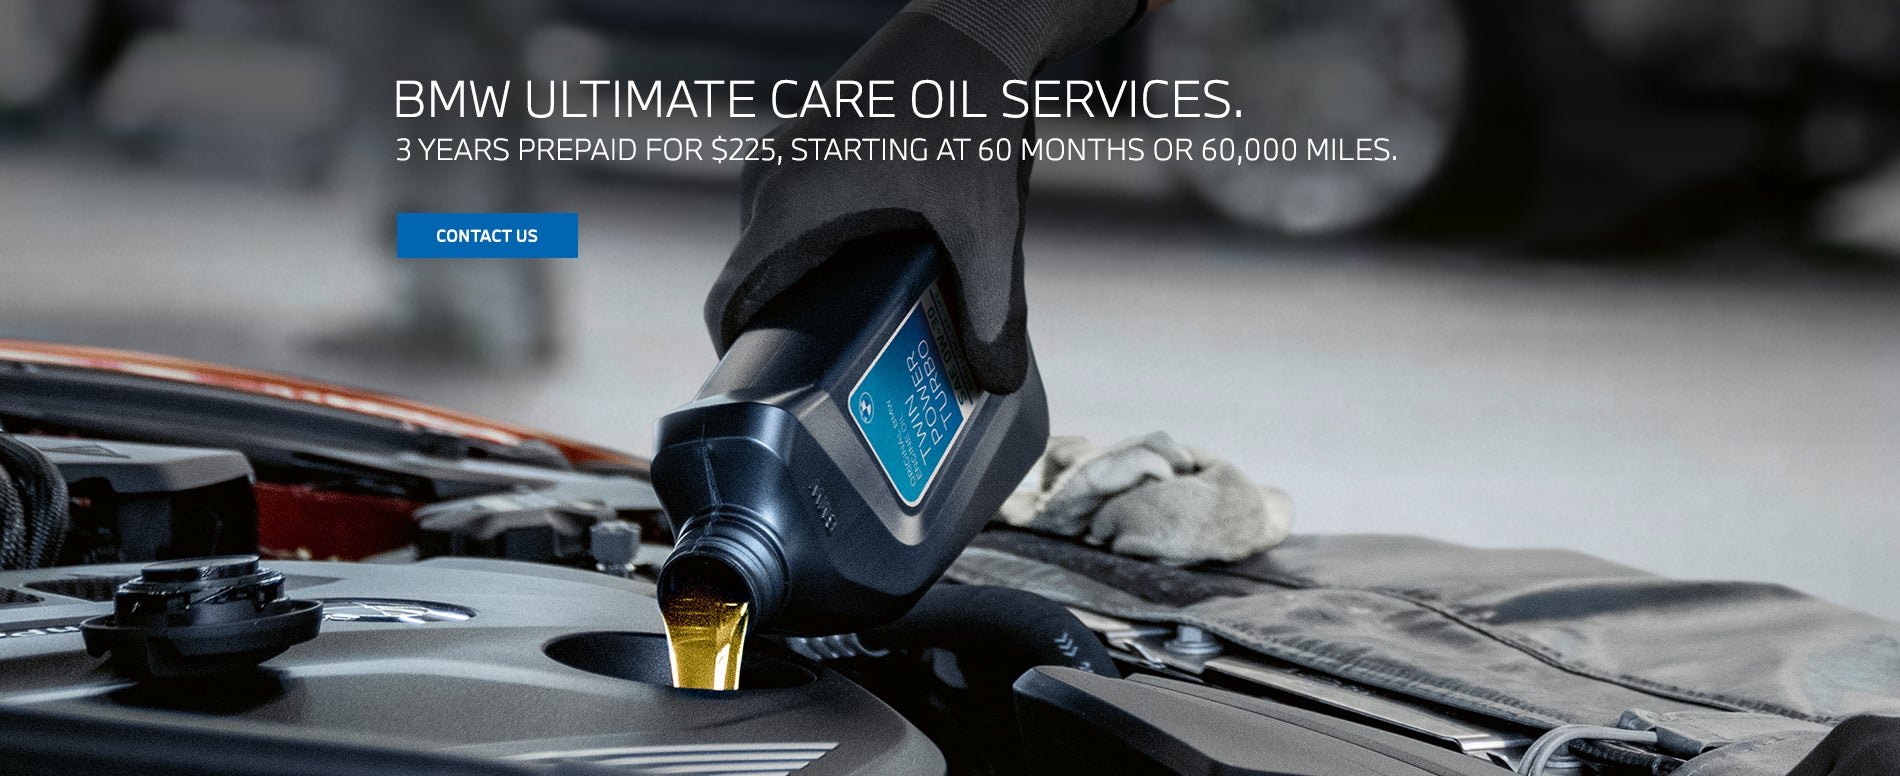 Ultimate Care Oil Services